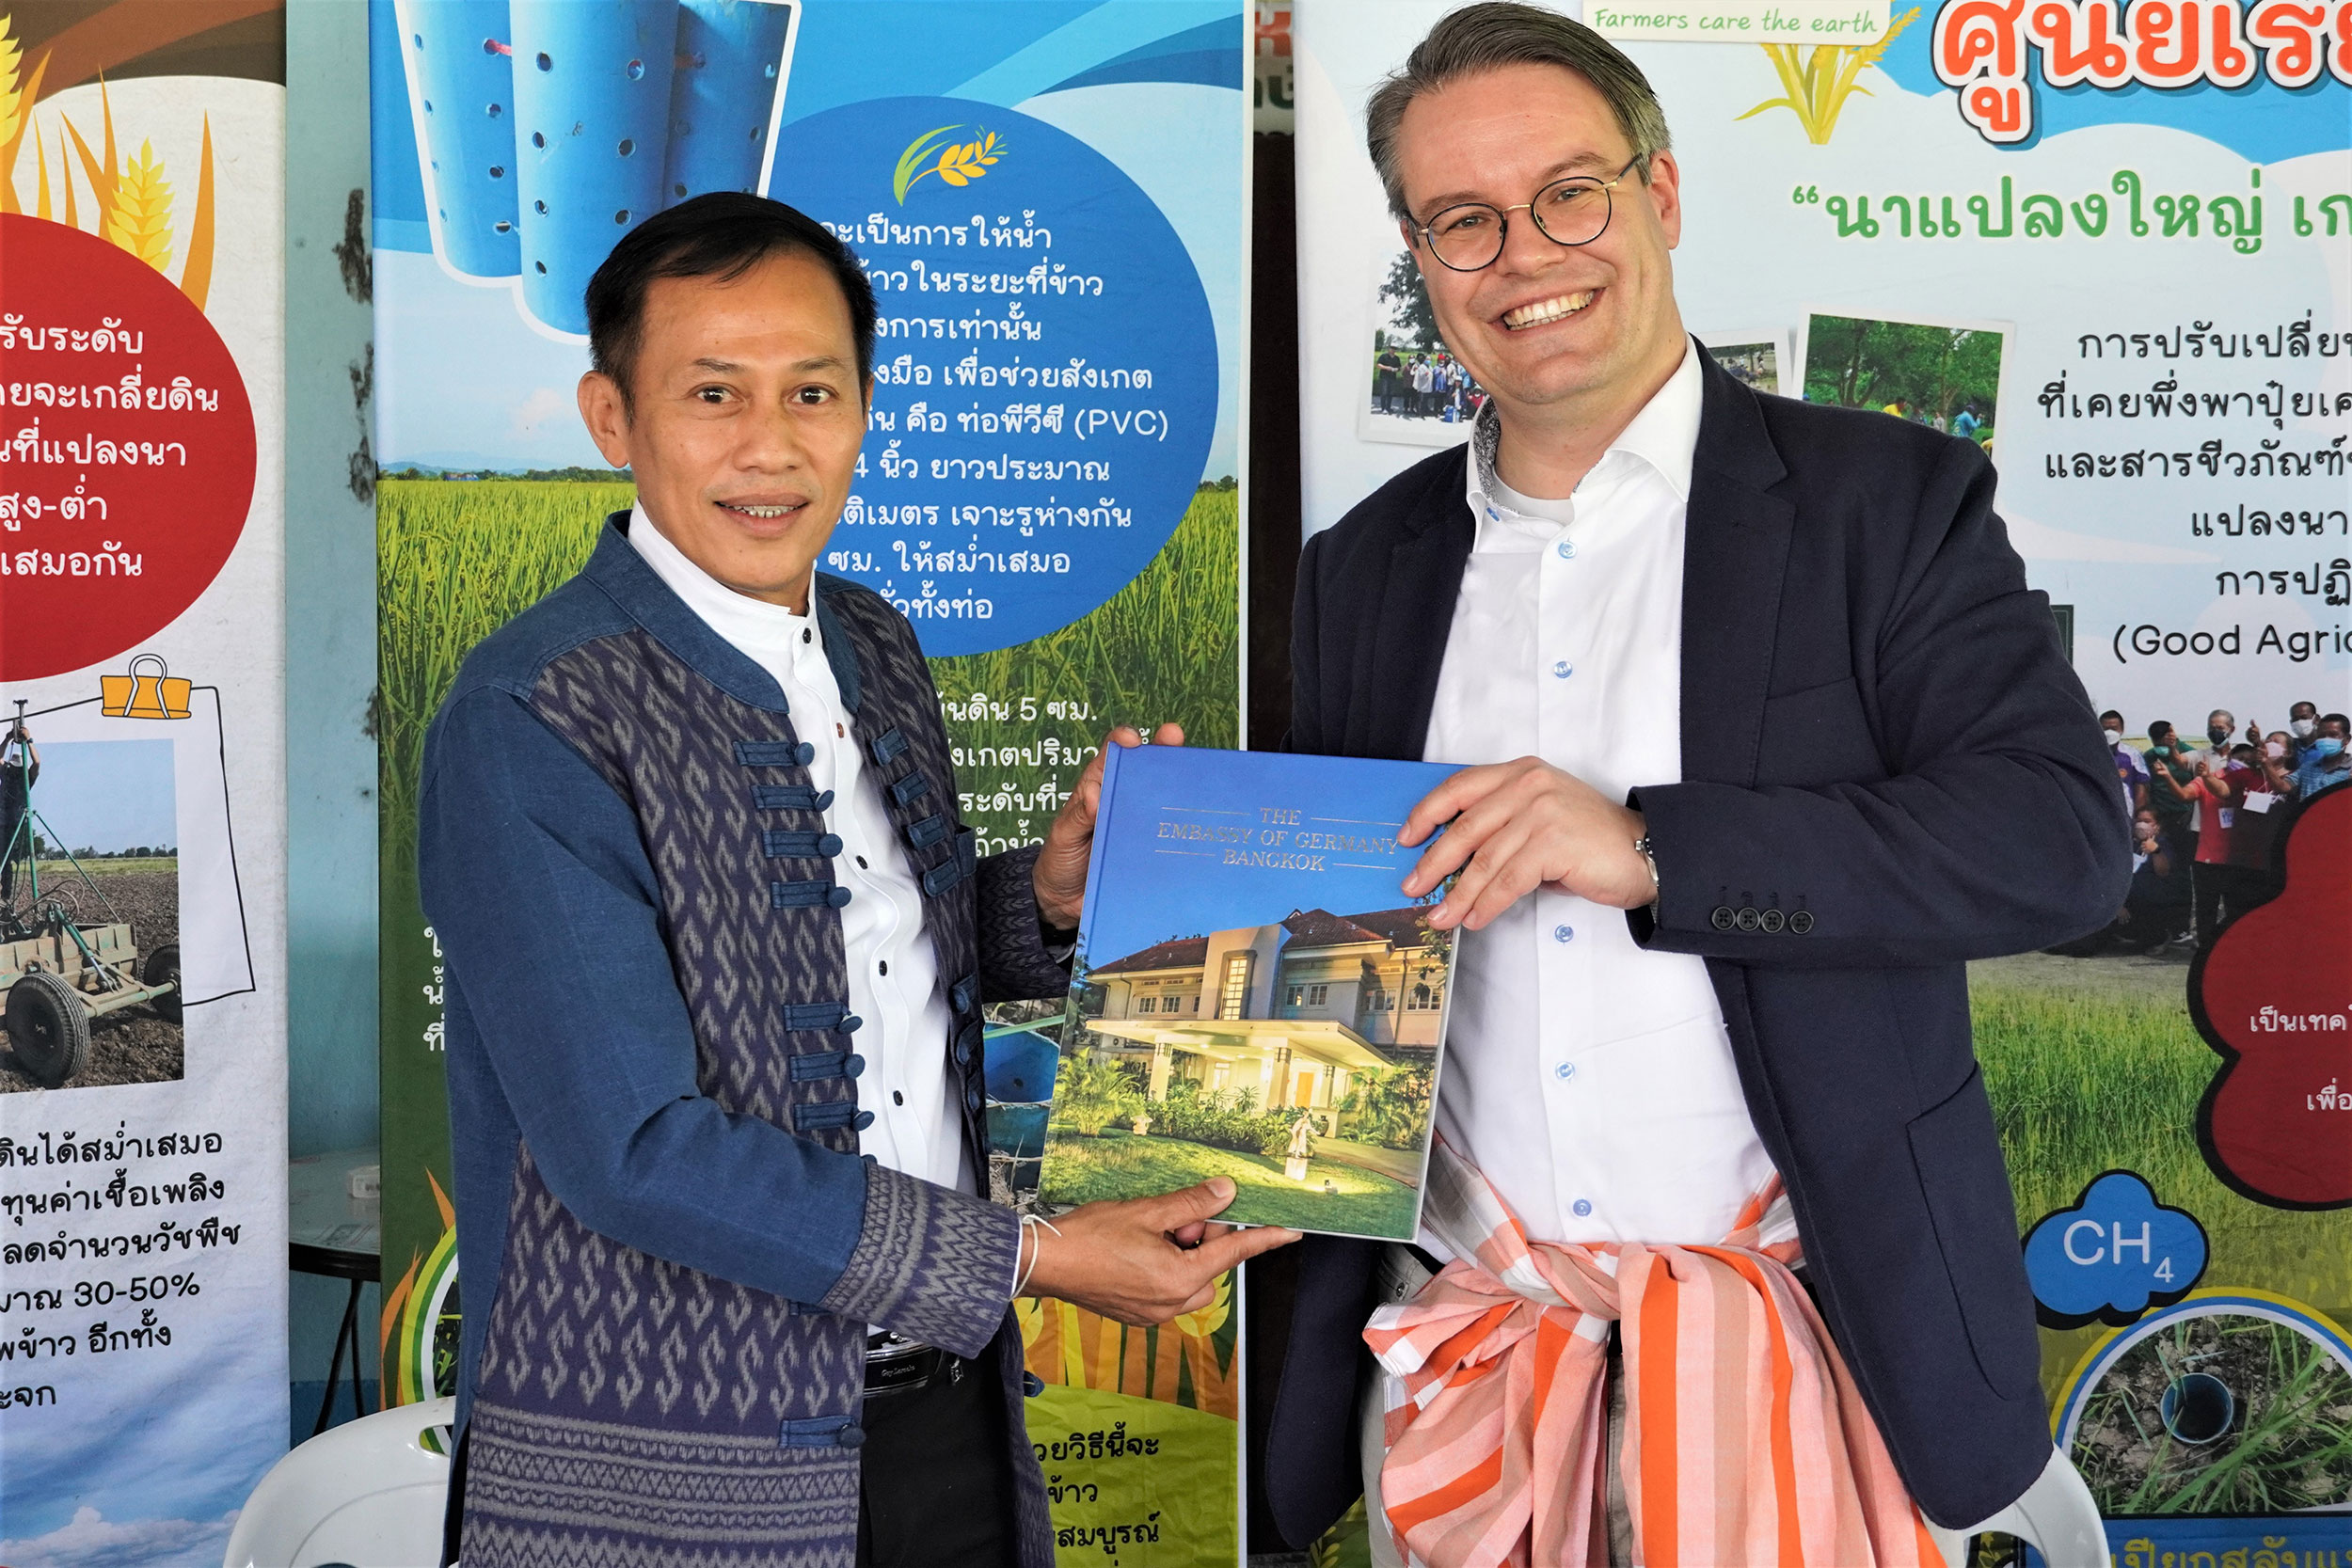 Dr Tobias Lindner, Minister of State at the Federal Foreign Office, presents a book on 160 years of Thai-German relations to Teerayut Chanditthawong, Suphanburi Deputy Provincial Governor. (ดร.โทบิอัส ลินด์เนอร์ มอบหนังสือ 160 ปี ความสัมพันธ์ทางการทูตเยอรมัน-ไทย ให้กับคุณธีรยุทธ์ จันทร์ดิษฐวงษ์ รองผู้ว่าราชการจังหวัดสุพรรณบุรี เป็นที่ระลึก)